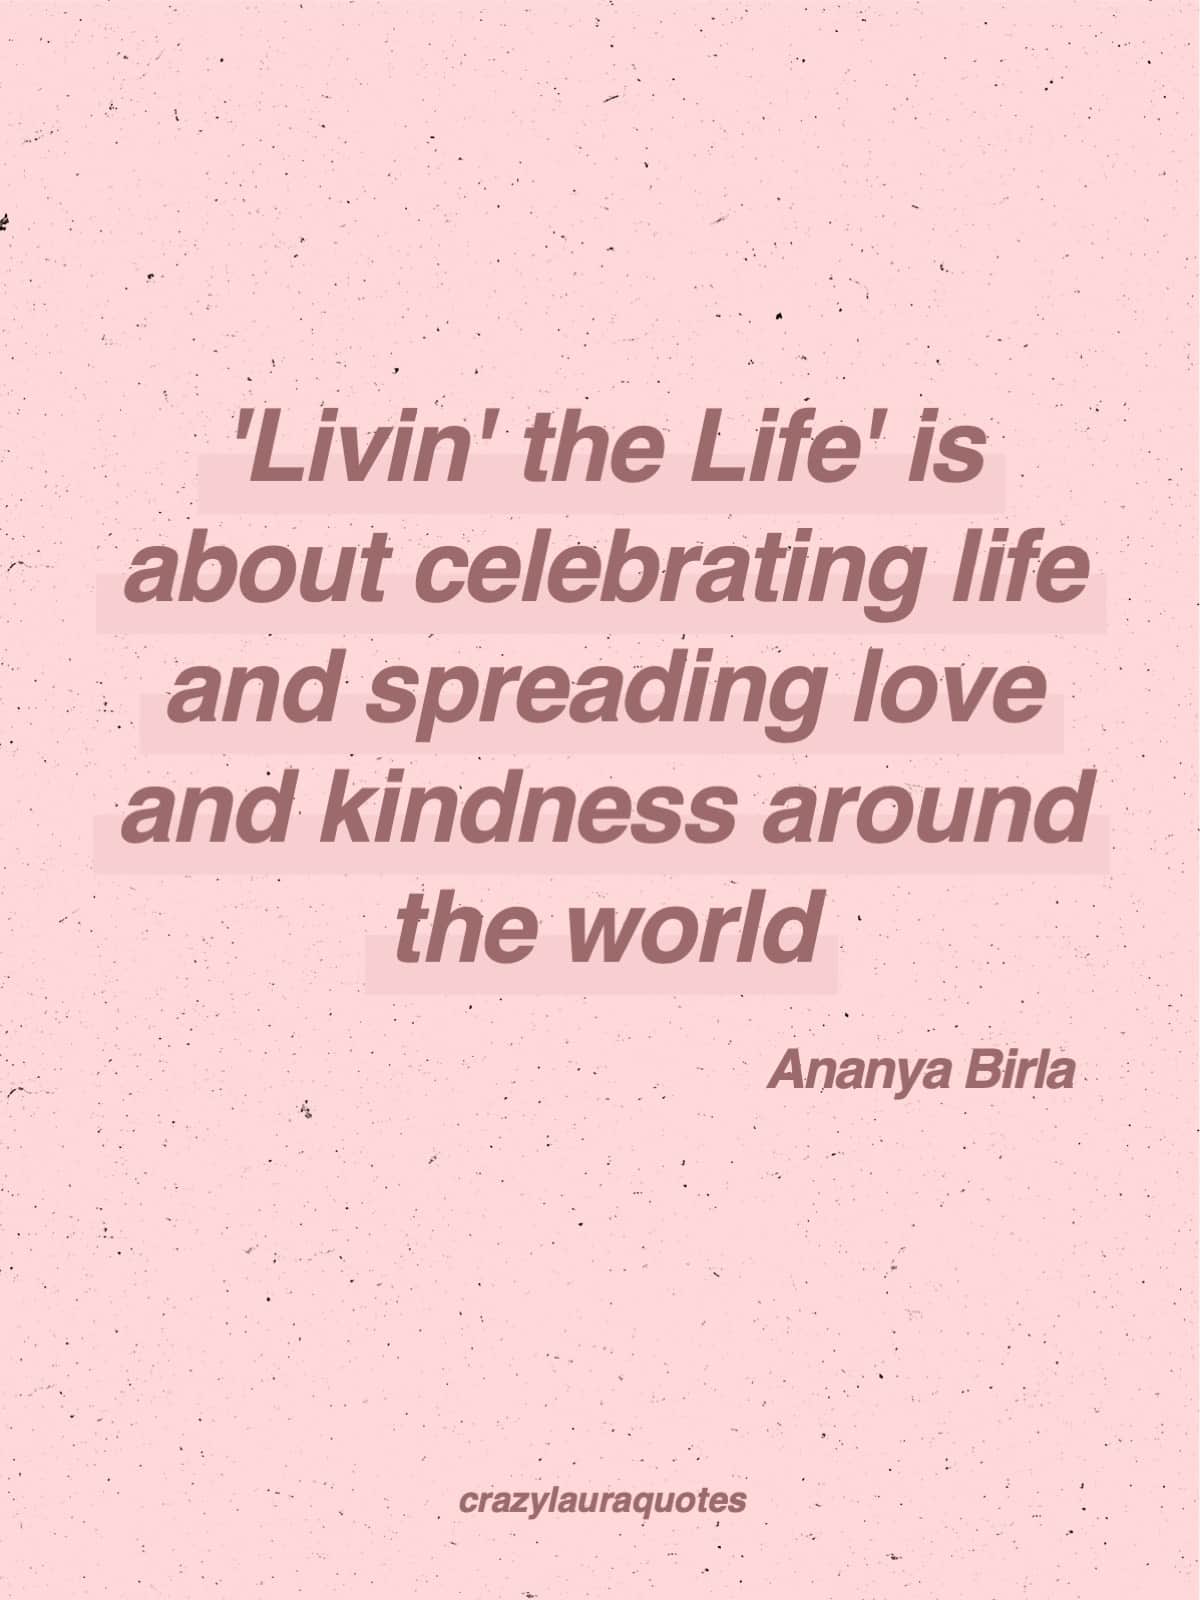 spread kindness and love in life ananya birla quote